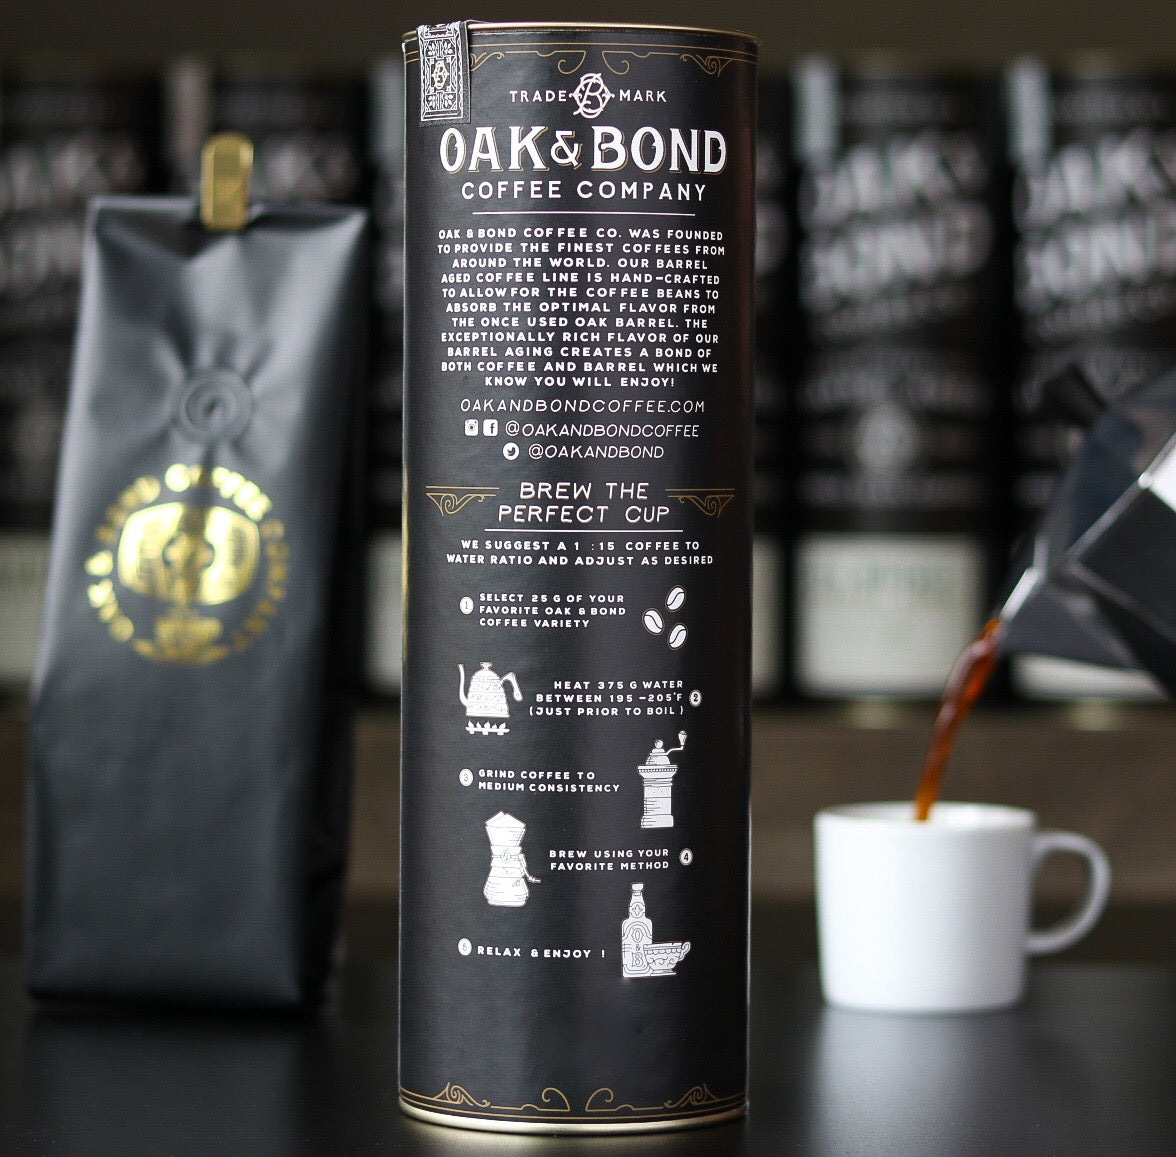 Espresso Bourbon Barrel Aged Coffee